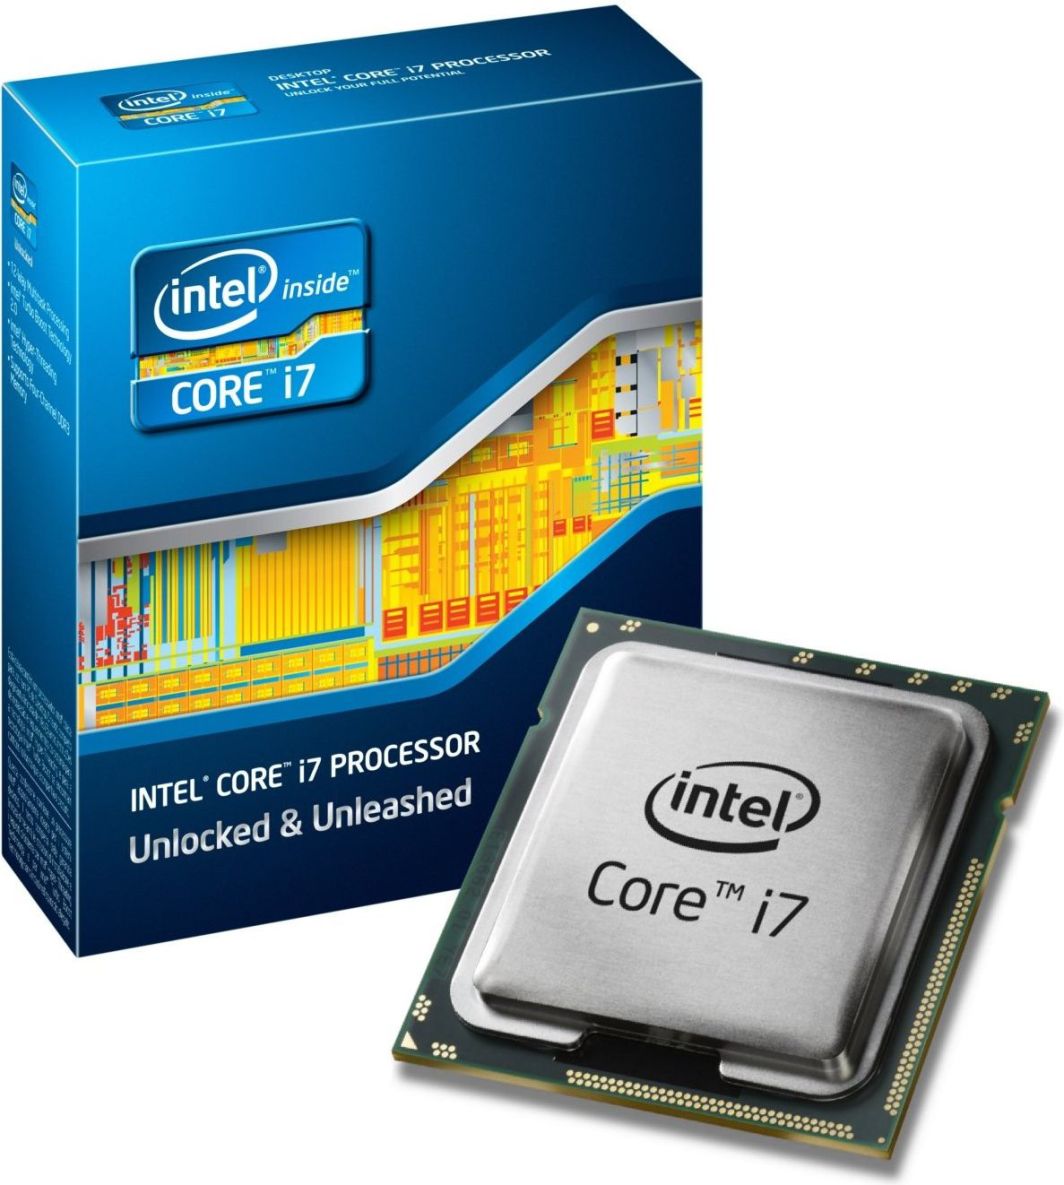 Купить интел коре 7. Процессор Intel® Core™ i7. Процессор Интел Core i7. Процессор для ноутбука Intel Core i7. Процессор Интел коре ай 7.